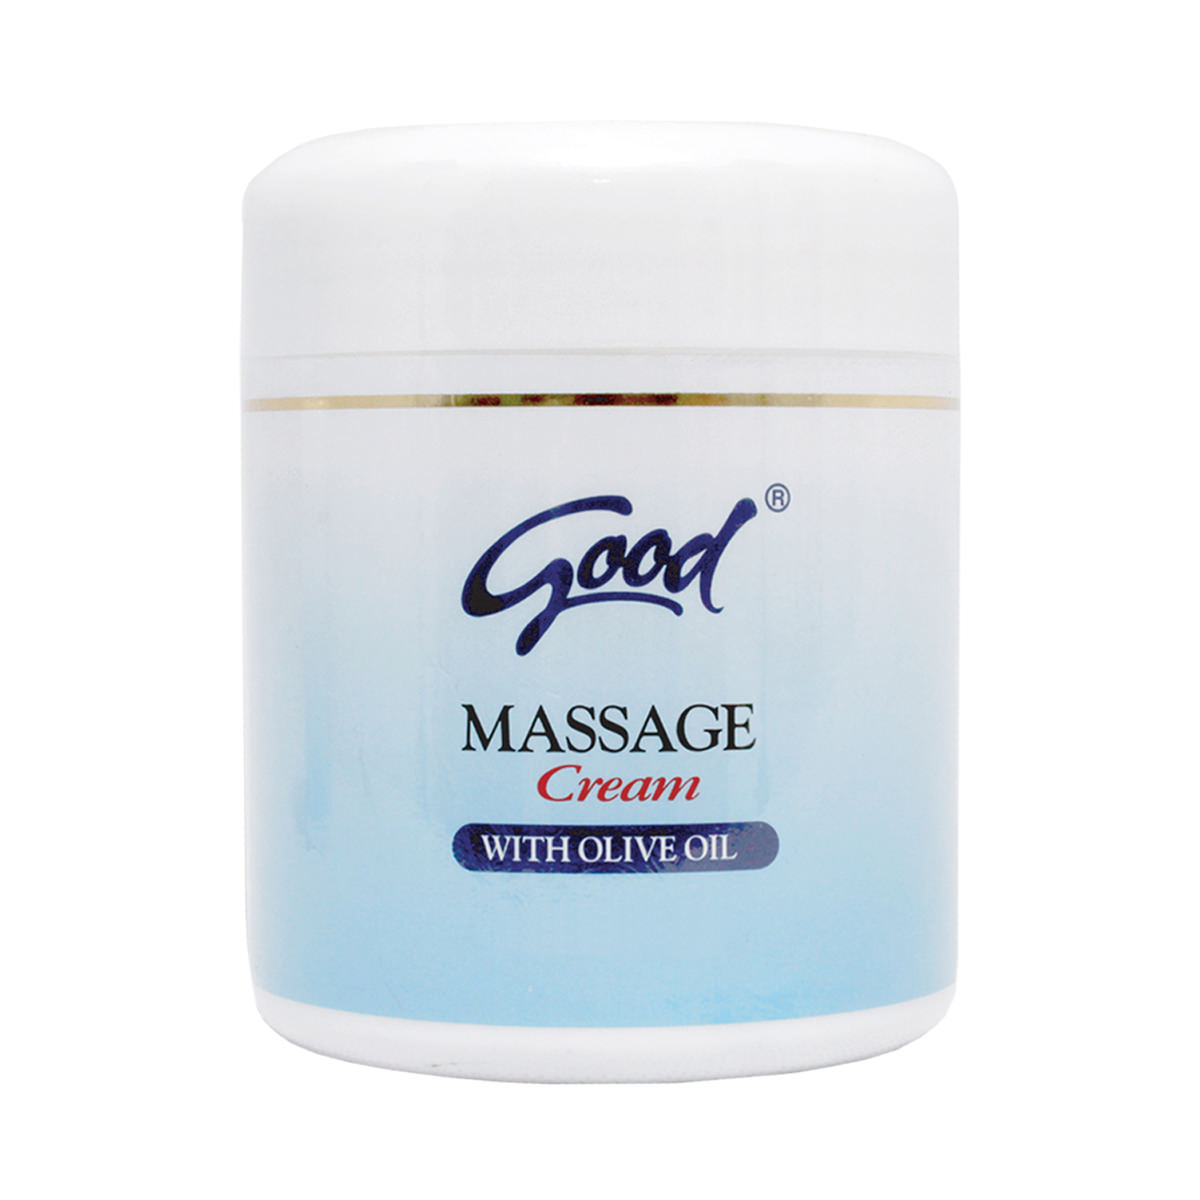 Good-Massage-Cream-with-Olive-Oil-680g-sfw(1)